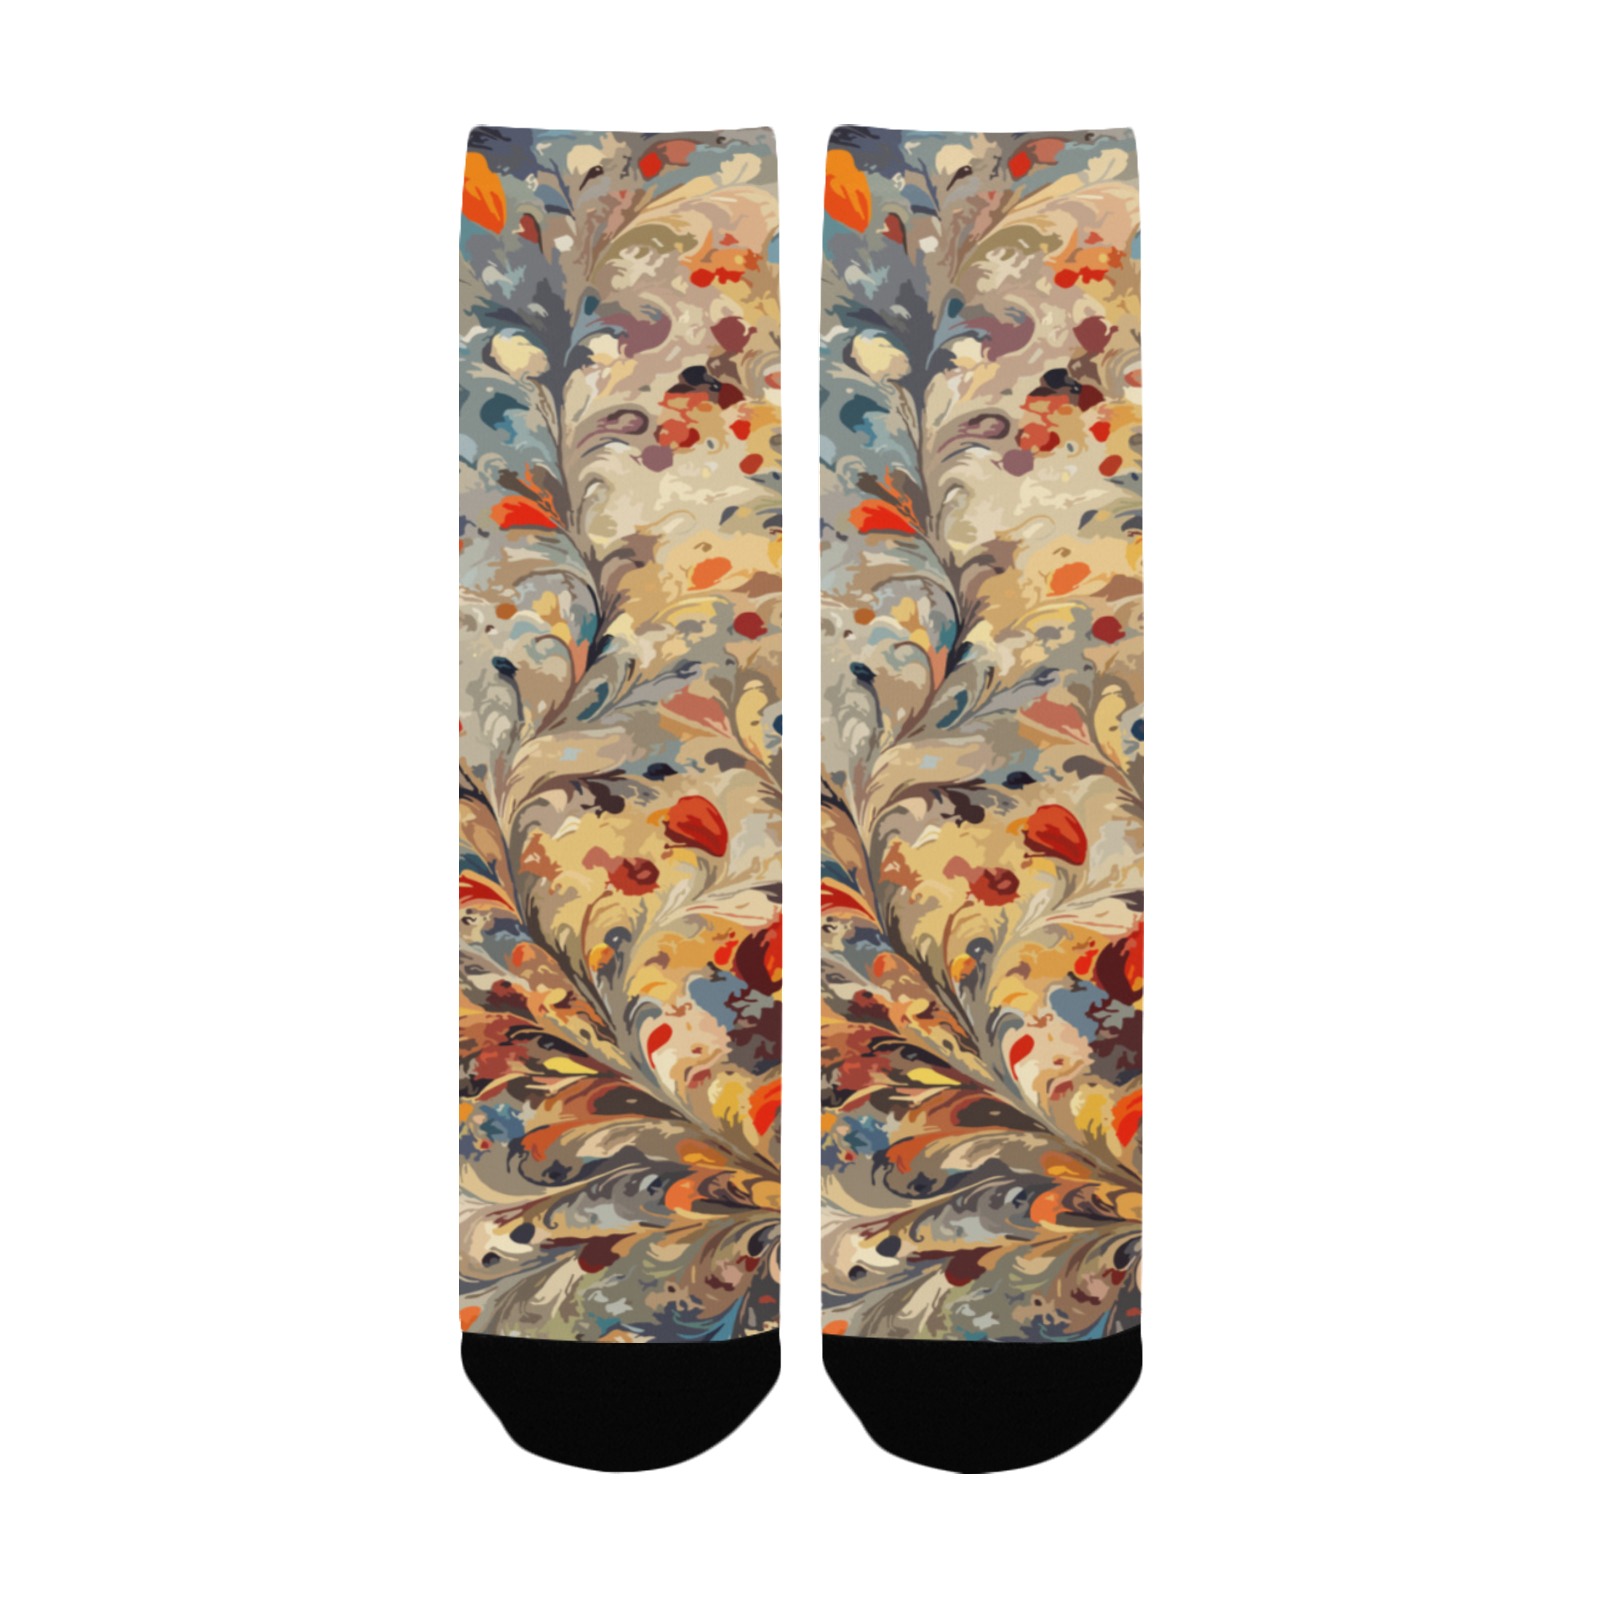 Charming floral ornament. Elegant decorative art Custom Socks for Women